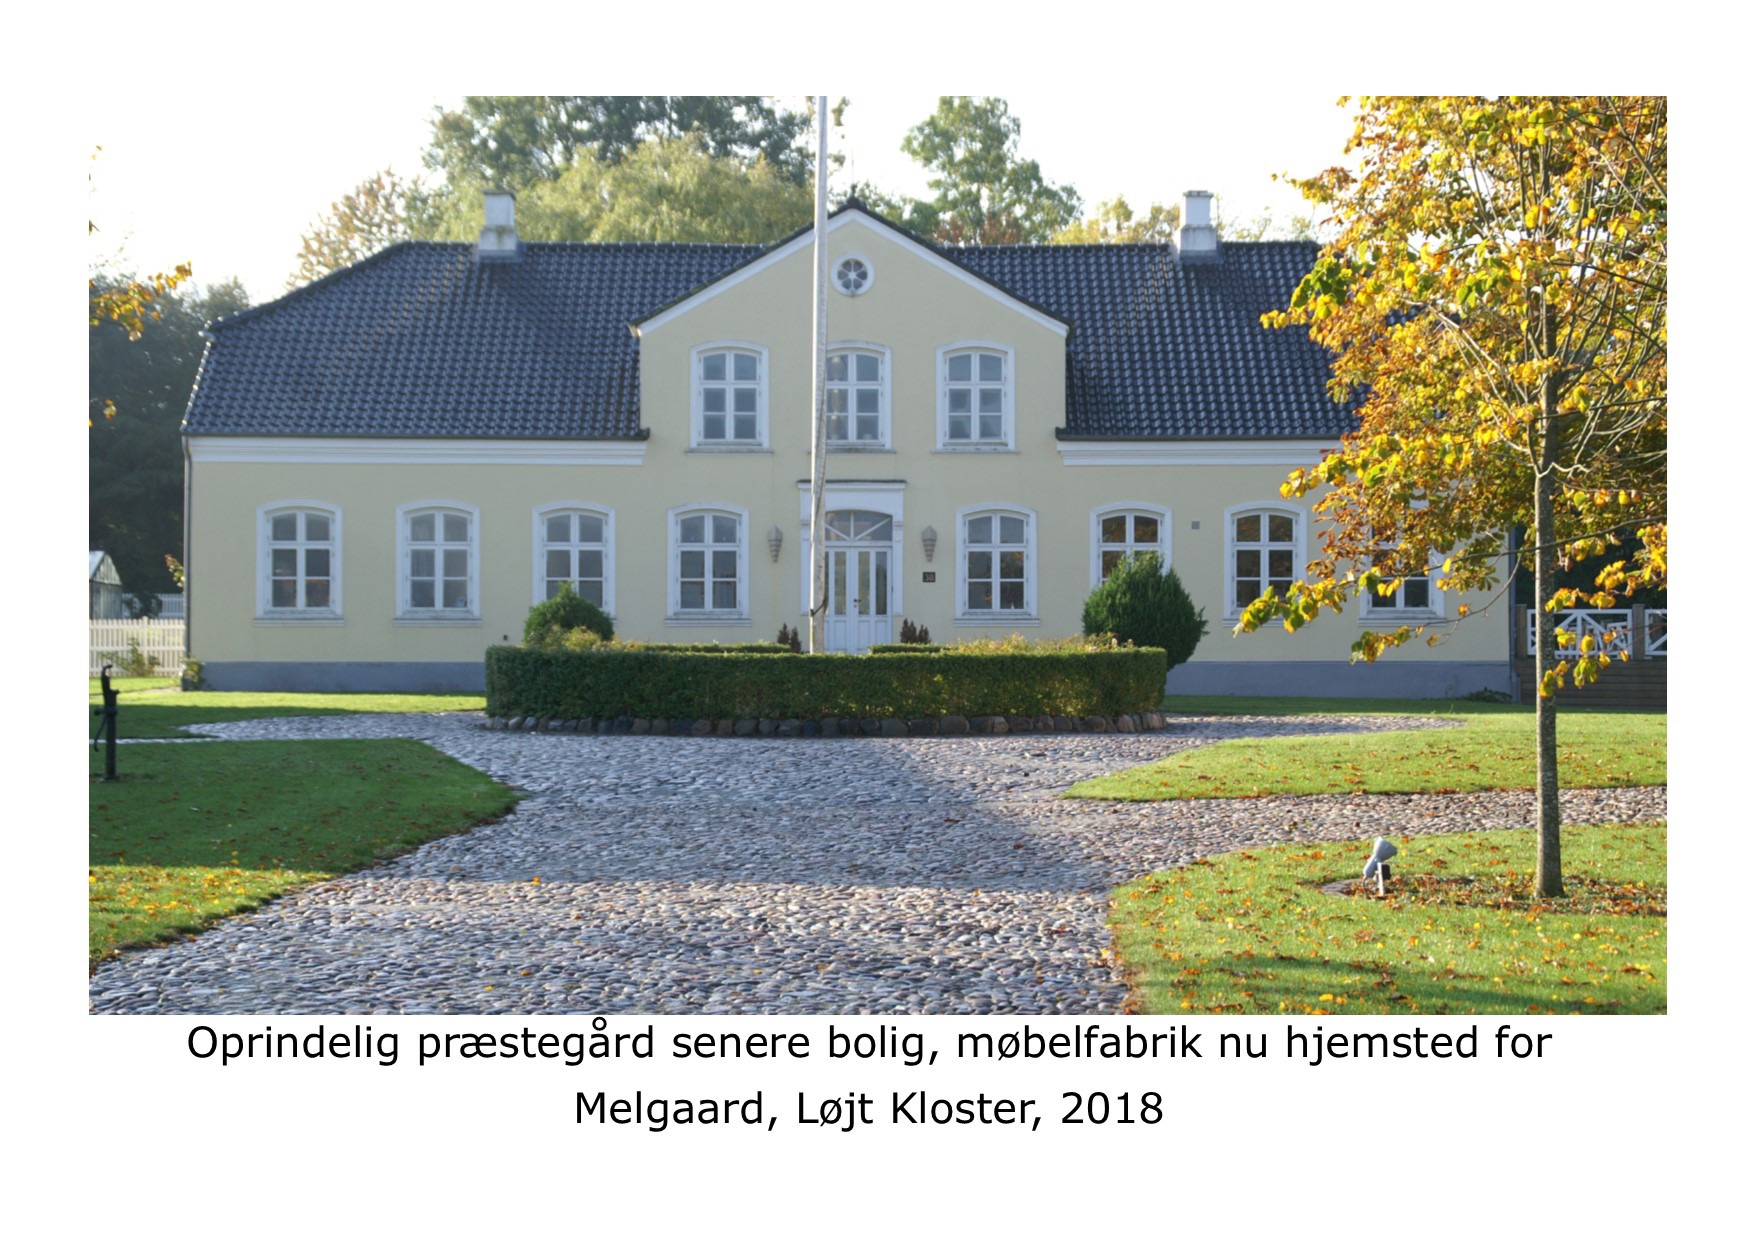 Præstegård senere møbelfabrik - Melgaard 2018 